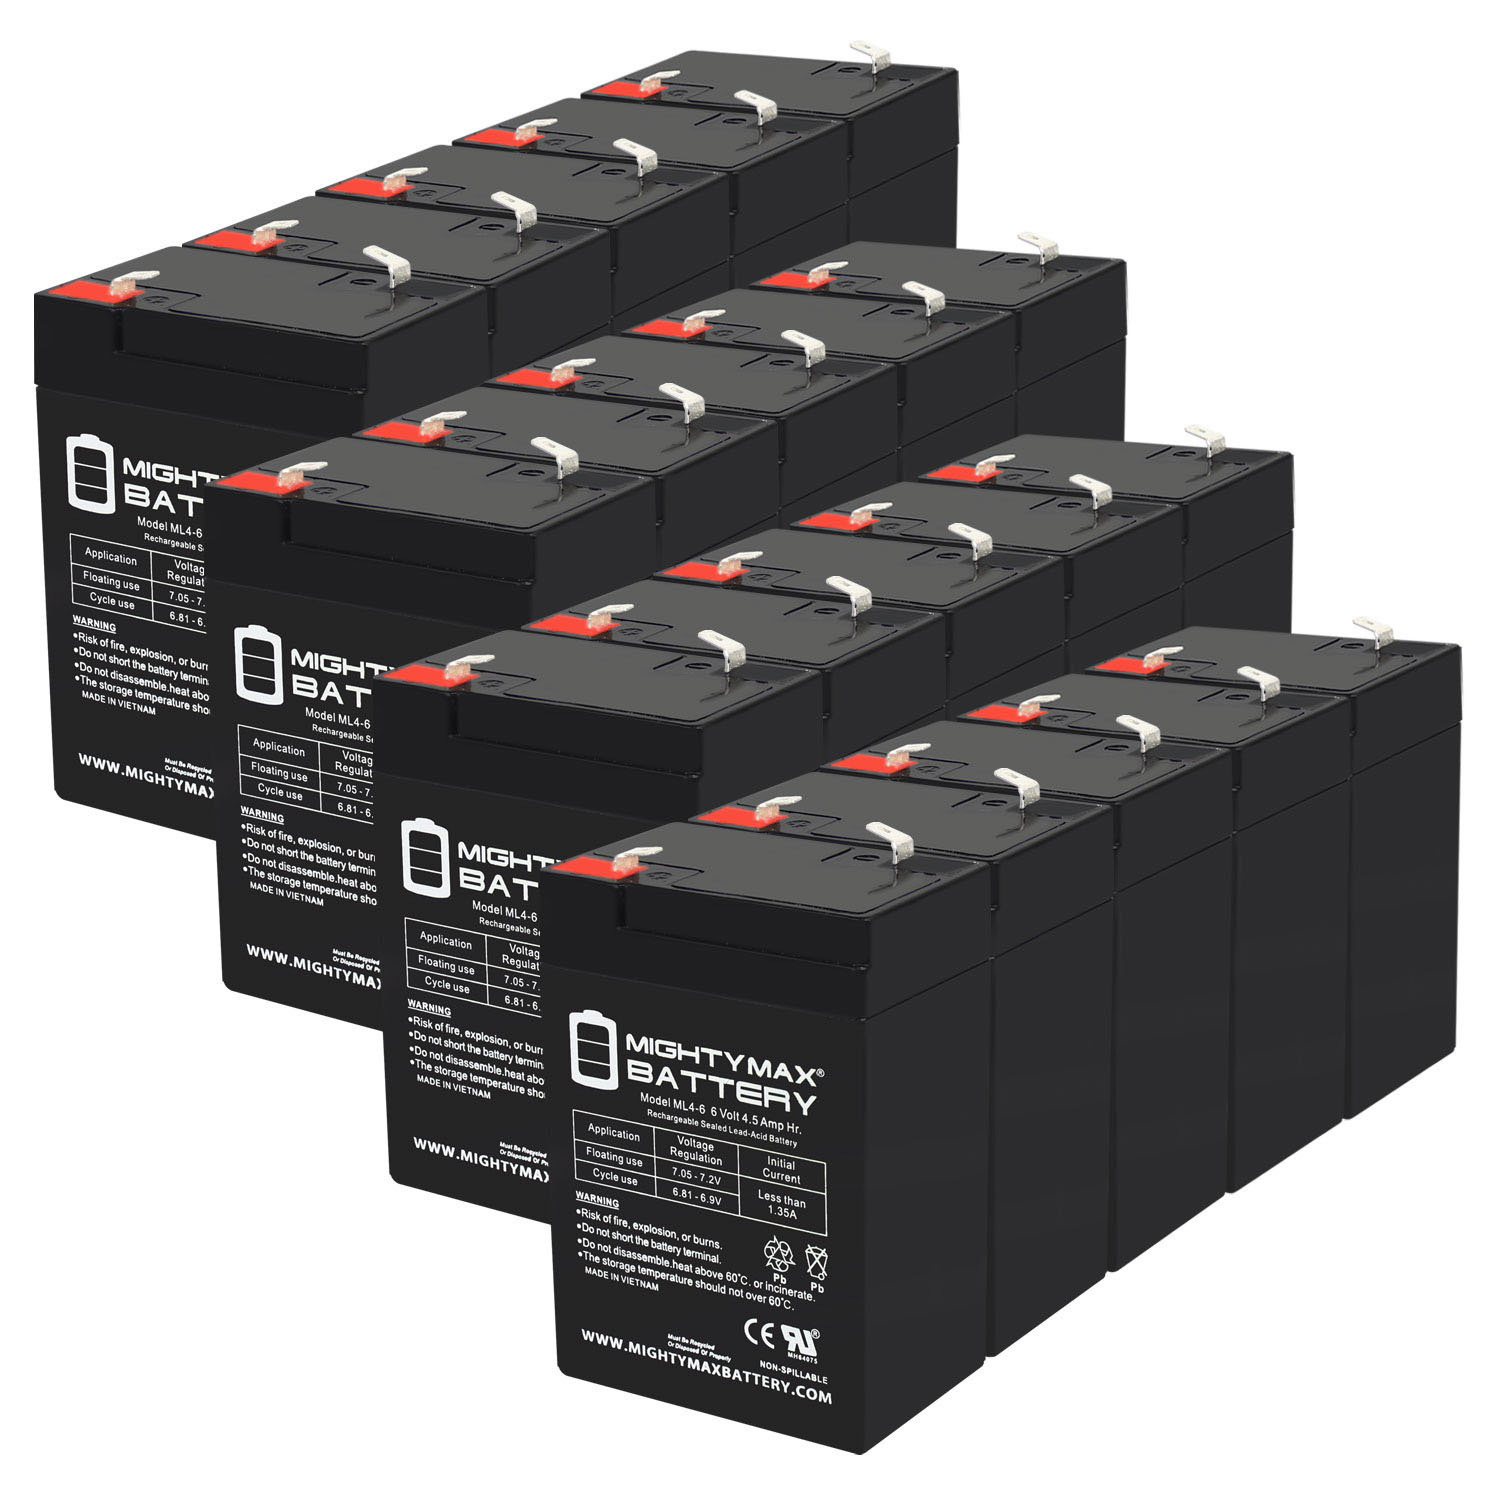 6V 4.5AH SLA Replacement Battery for Emergi-Lite 6M1 - 20 Pack